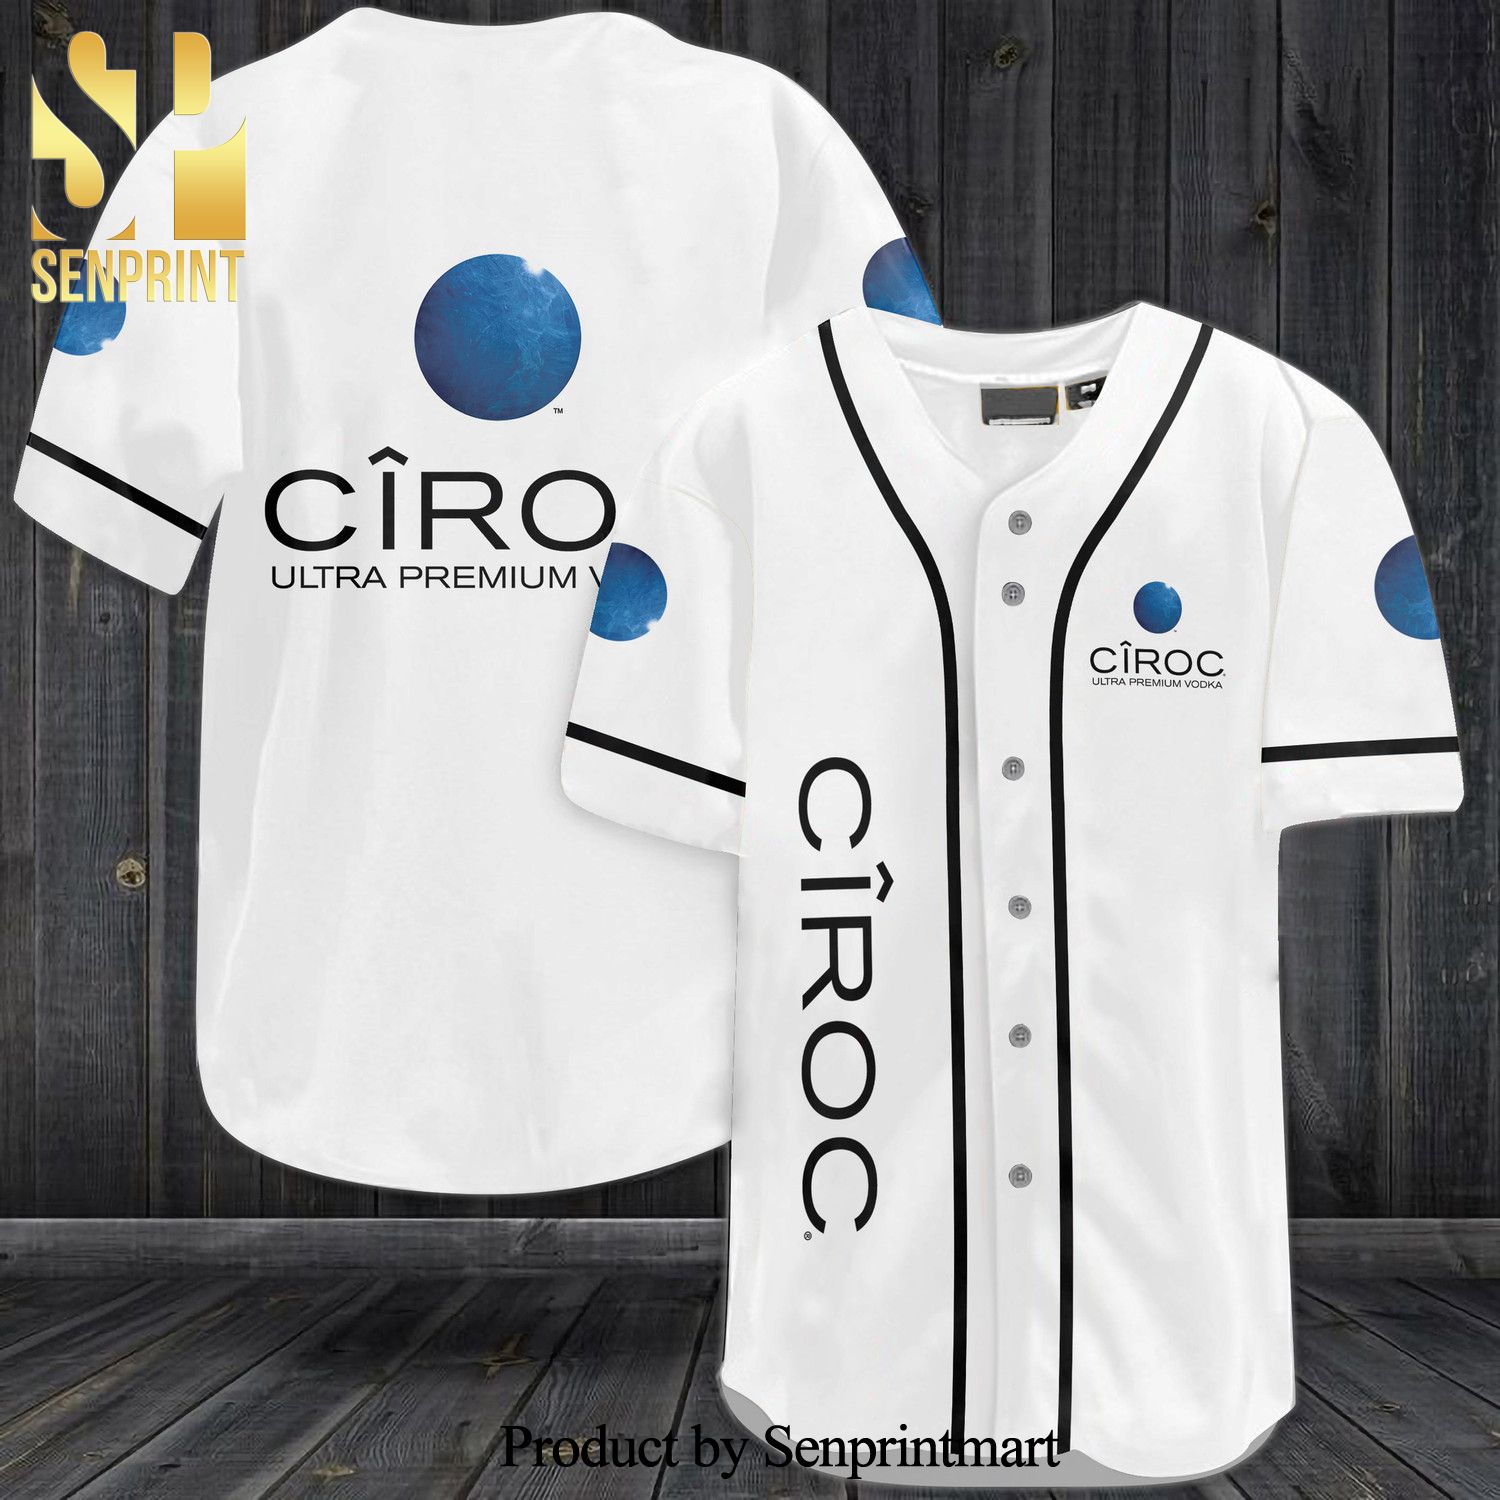 Ciroc Ultra Premium Vodka All Over Print Baseball Jersey – White